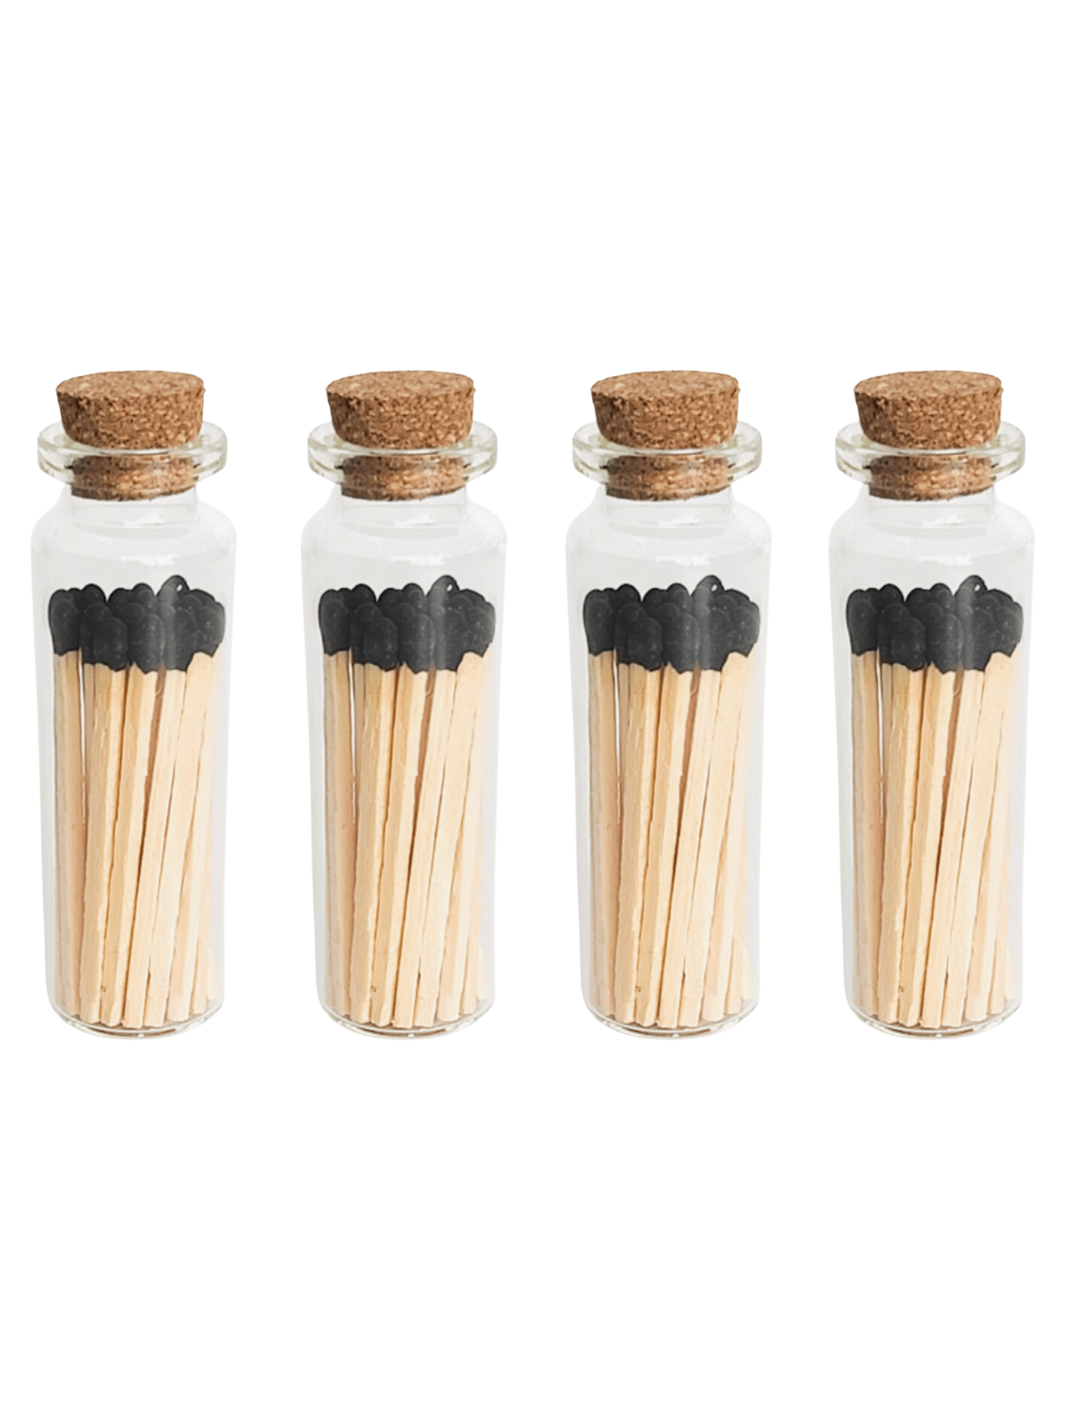 Black Tip Decorative Matches In Jar